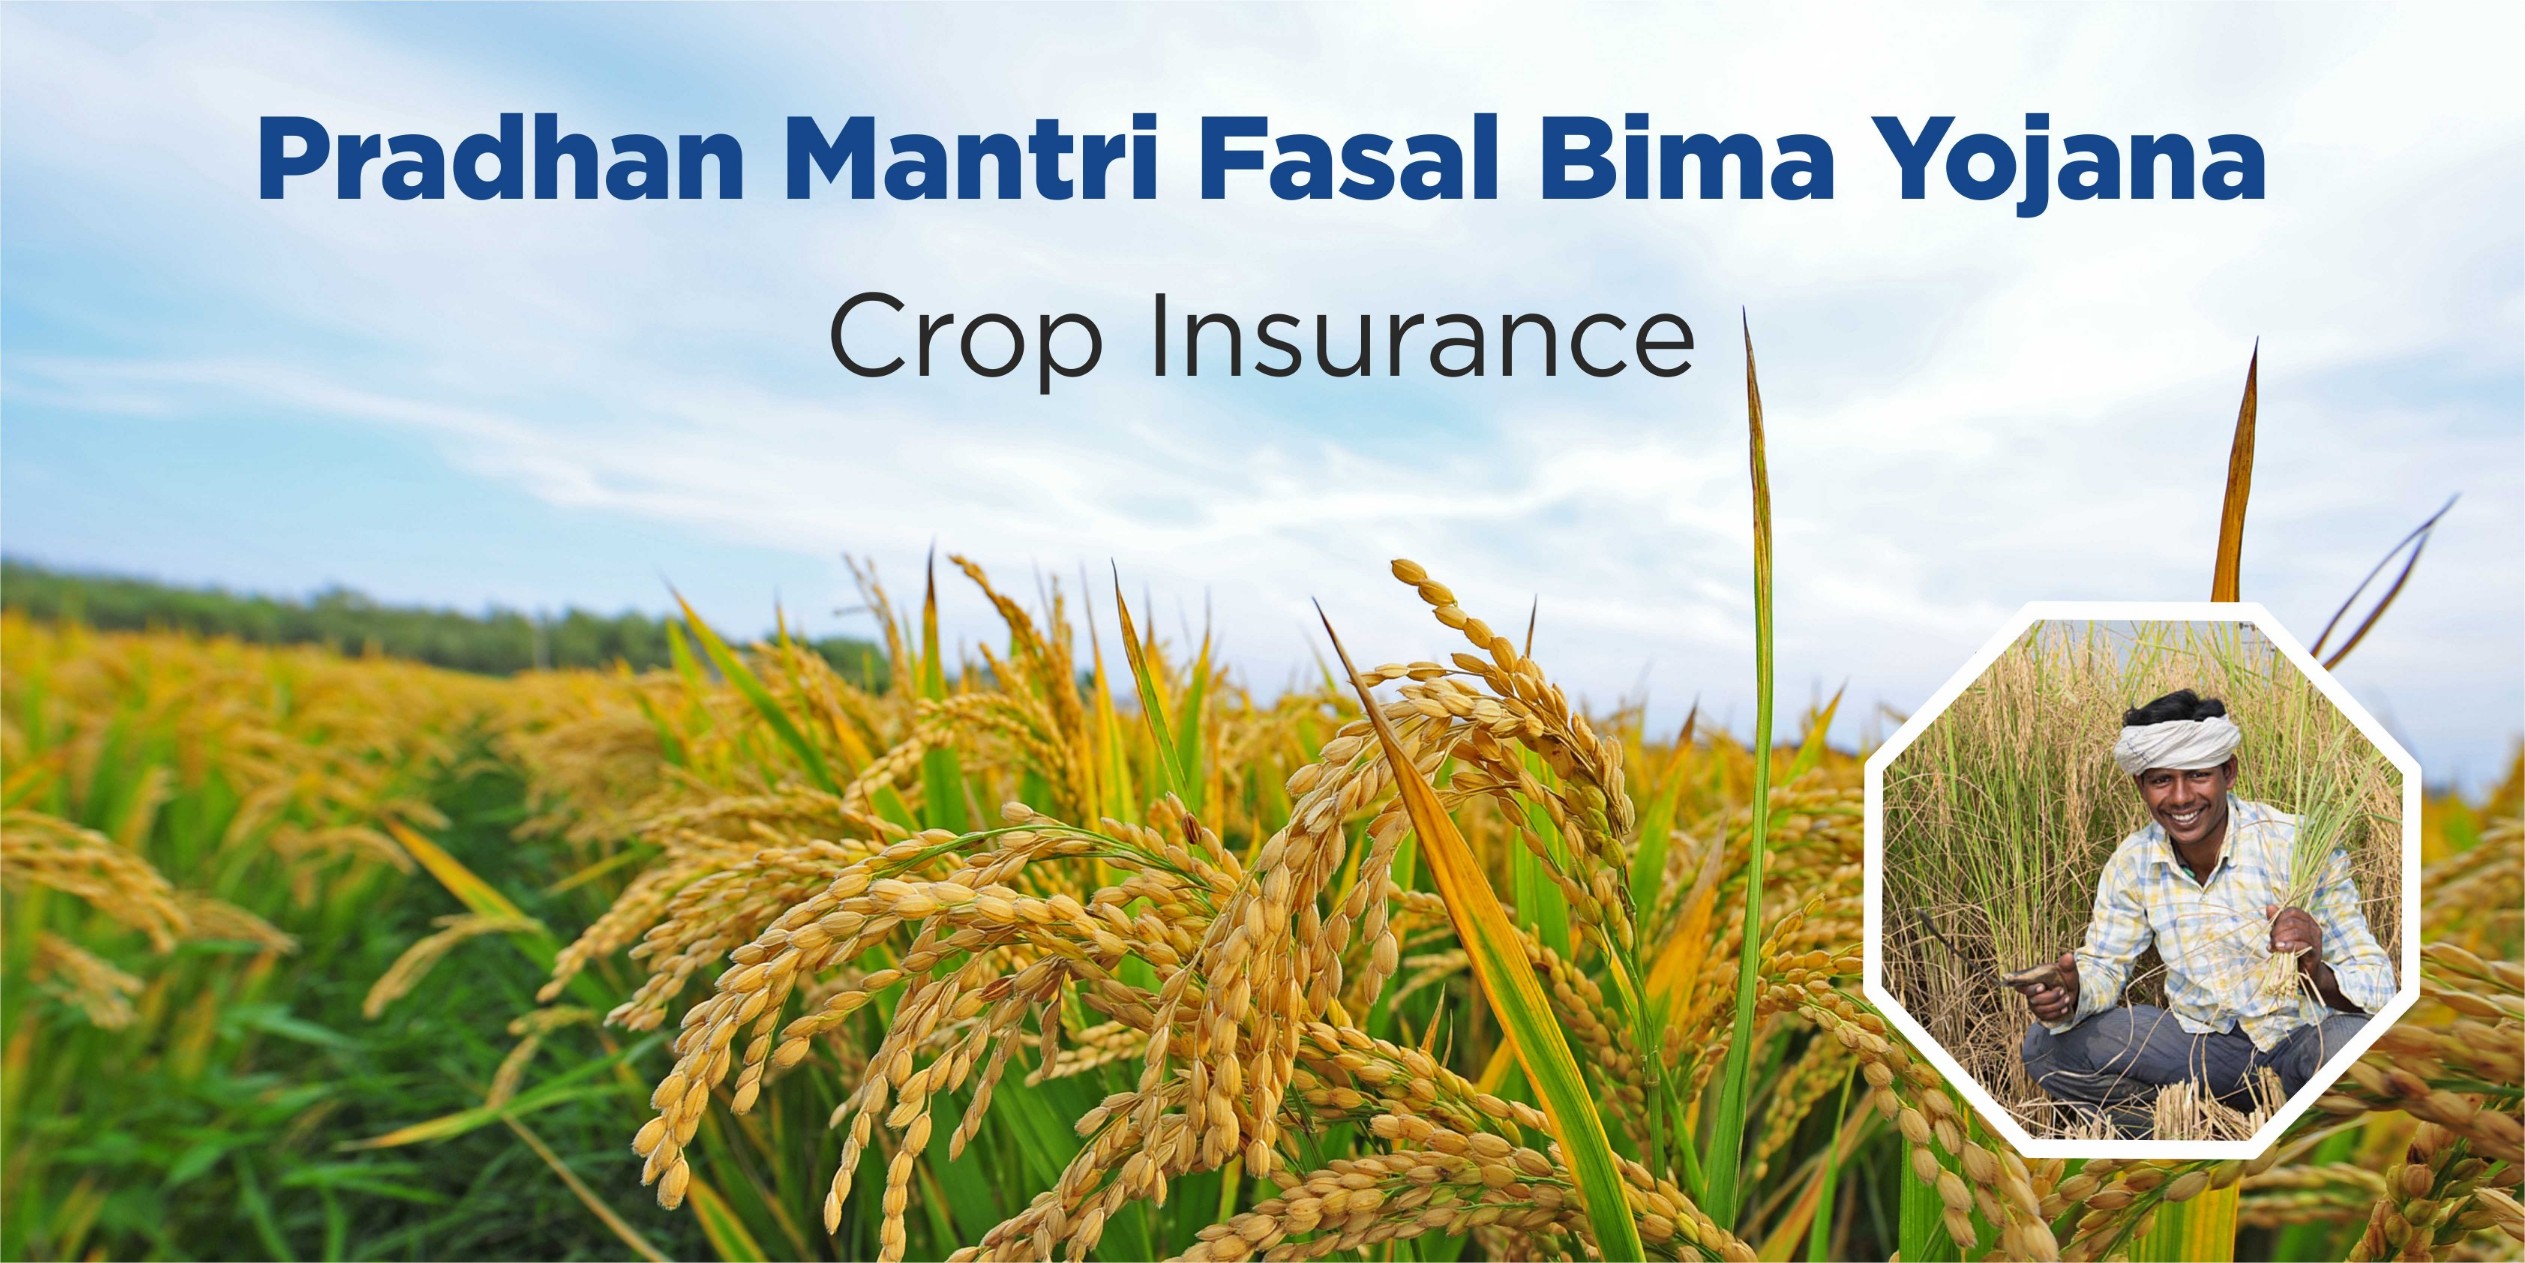 In this image we see the farmer with headline of Pradhan Mantri Fasal Bima Yojana